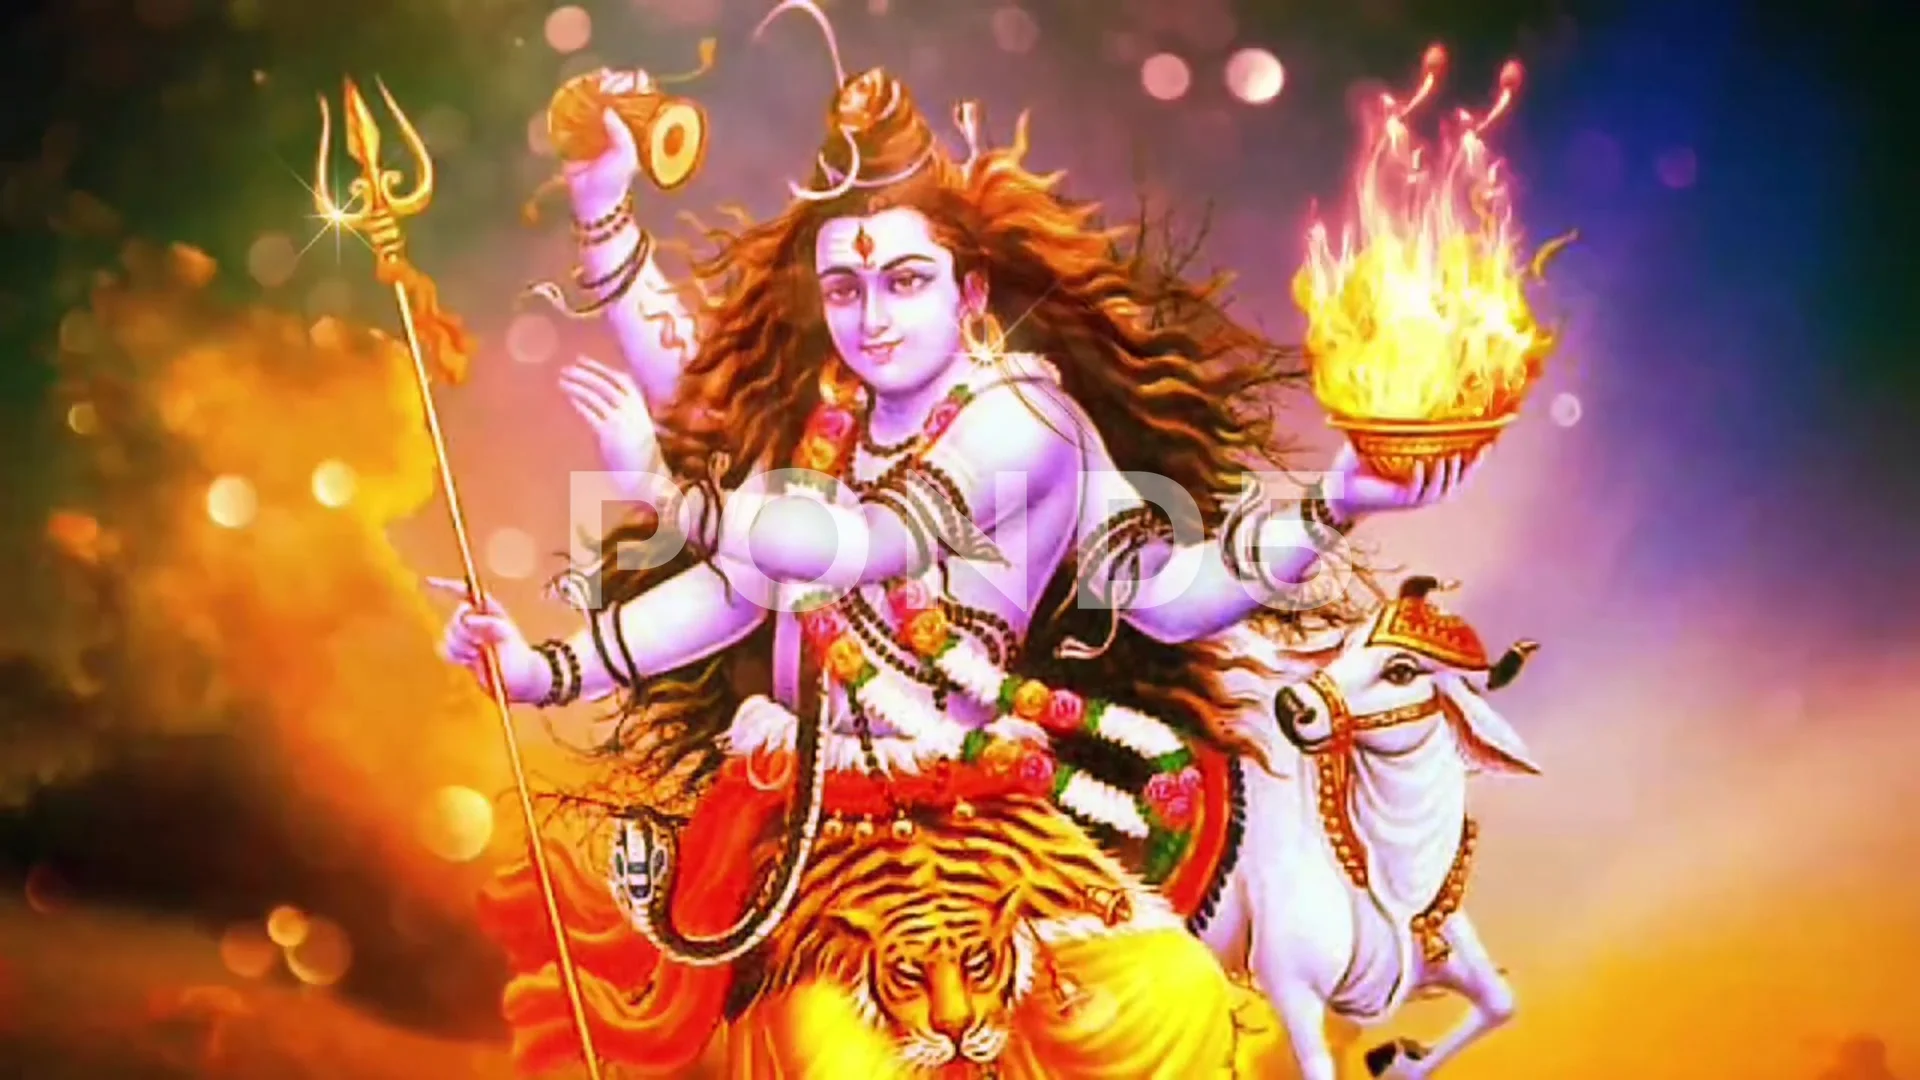 Shiva Cartoon Xxx Videos - Shiva with animated background 4K video | Stock Video | Pond5